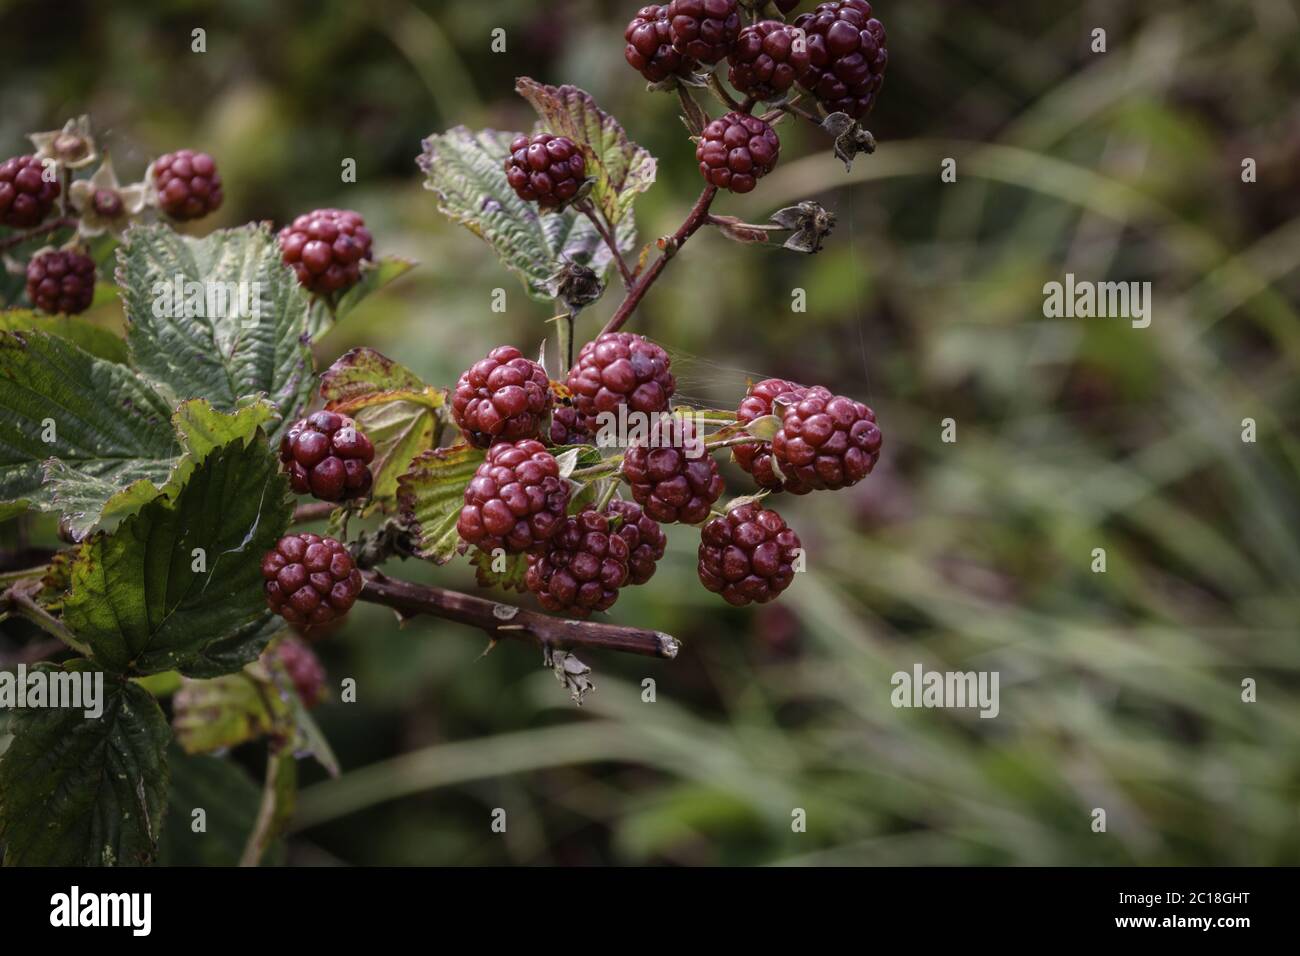 Blackberries, maturing fruits Stock Photo